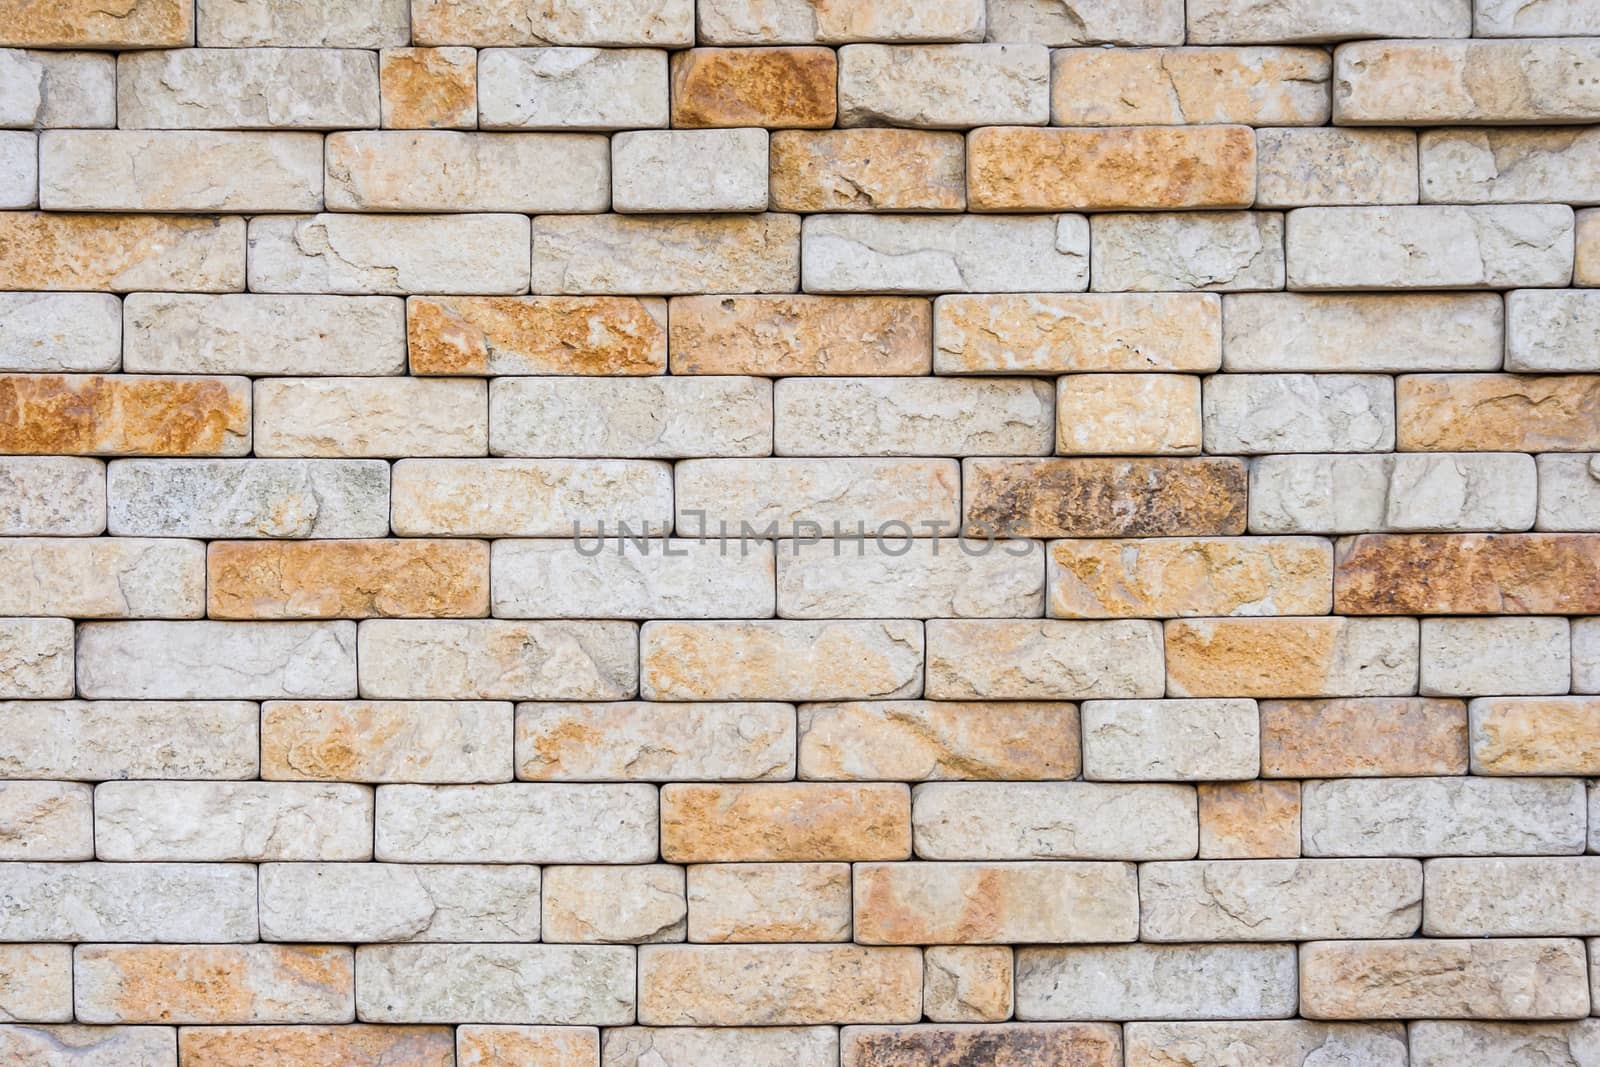 not smooth masonry brick wall of sand color